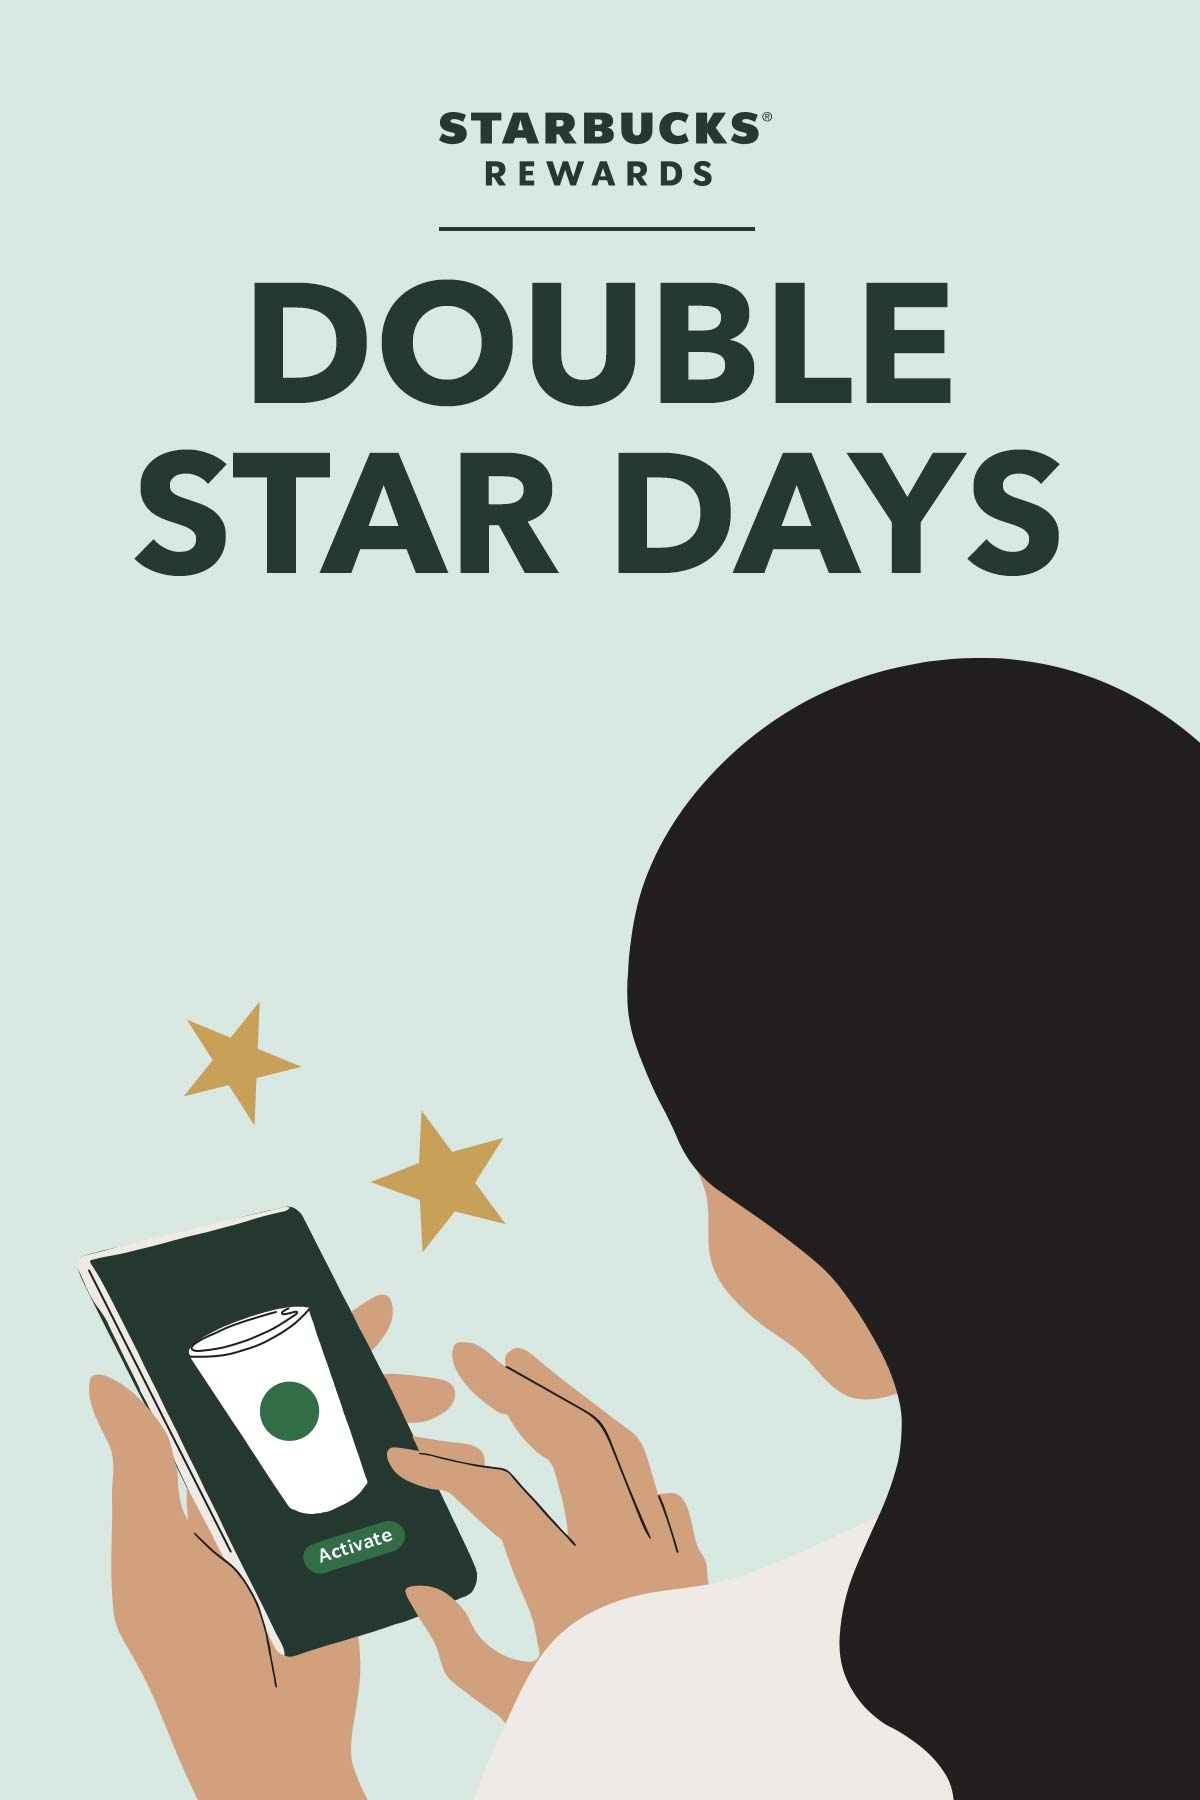 Double Star Days tekst met Starbucks logo en illustratie.